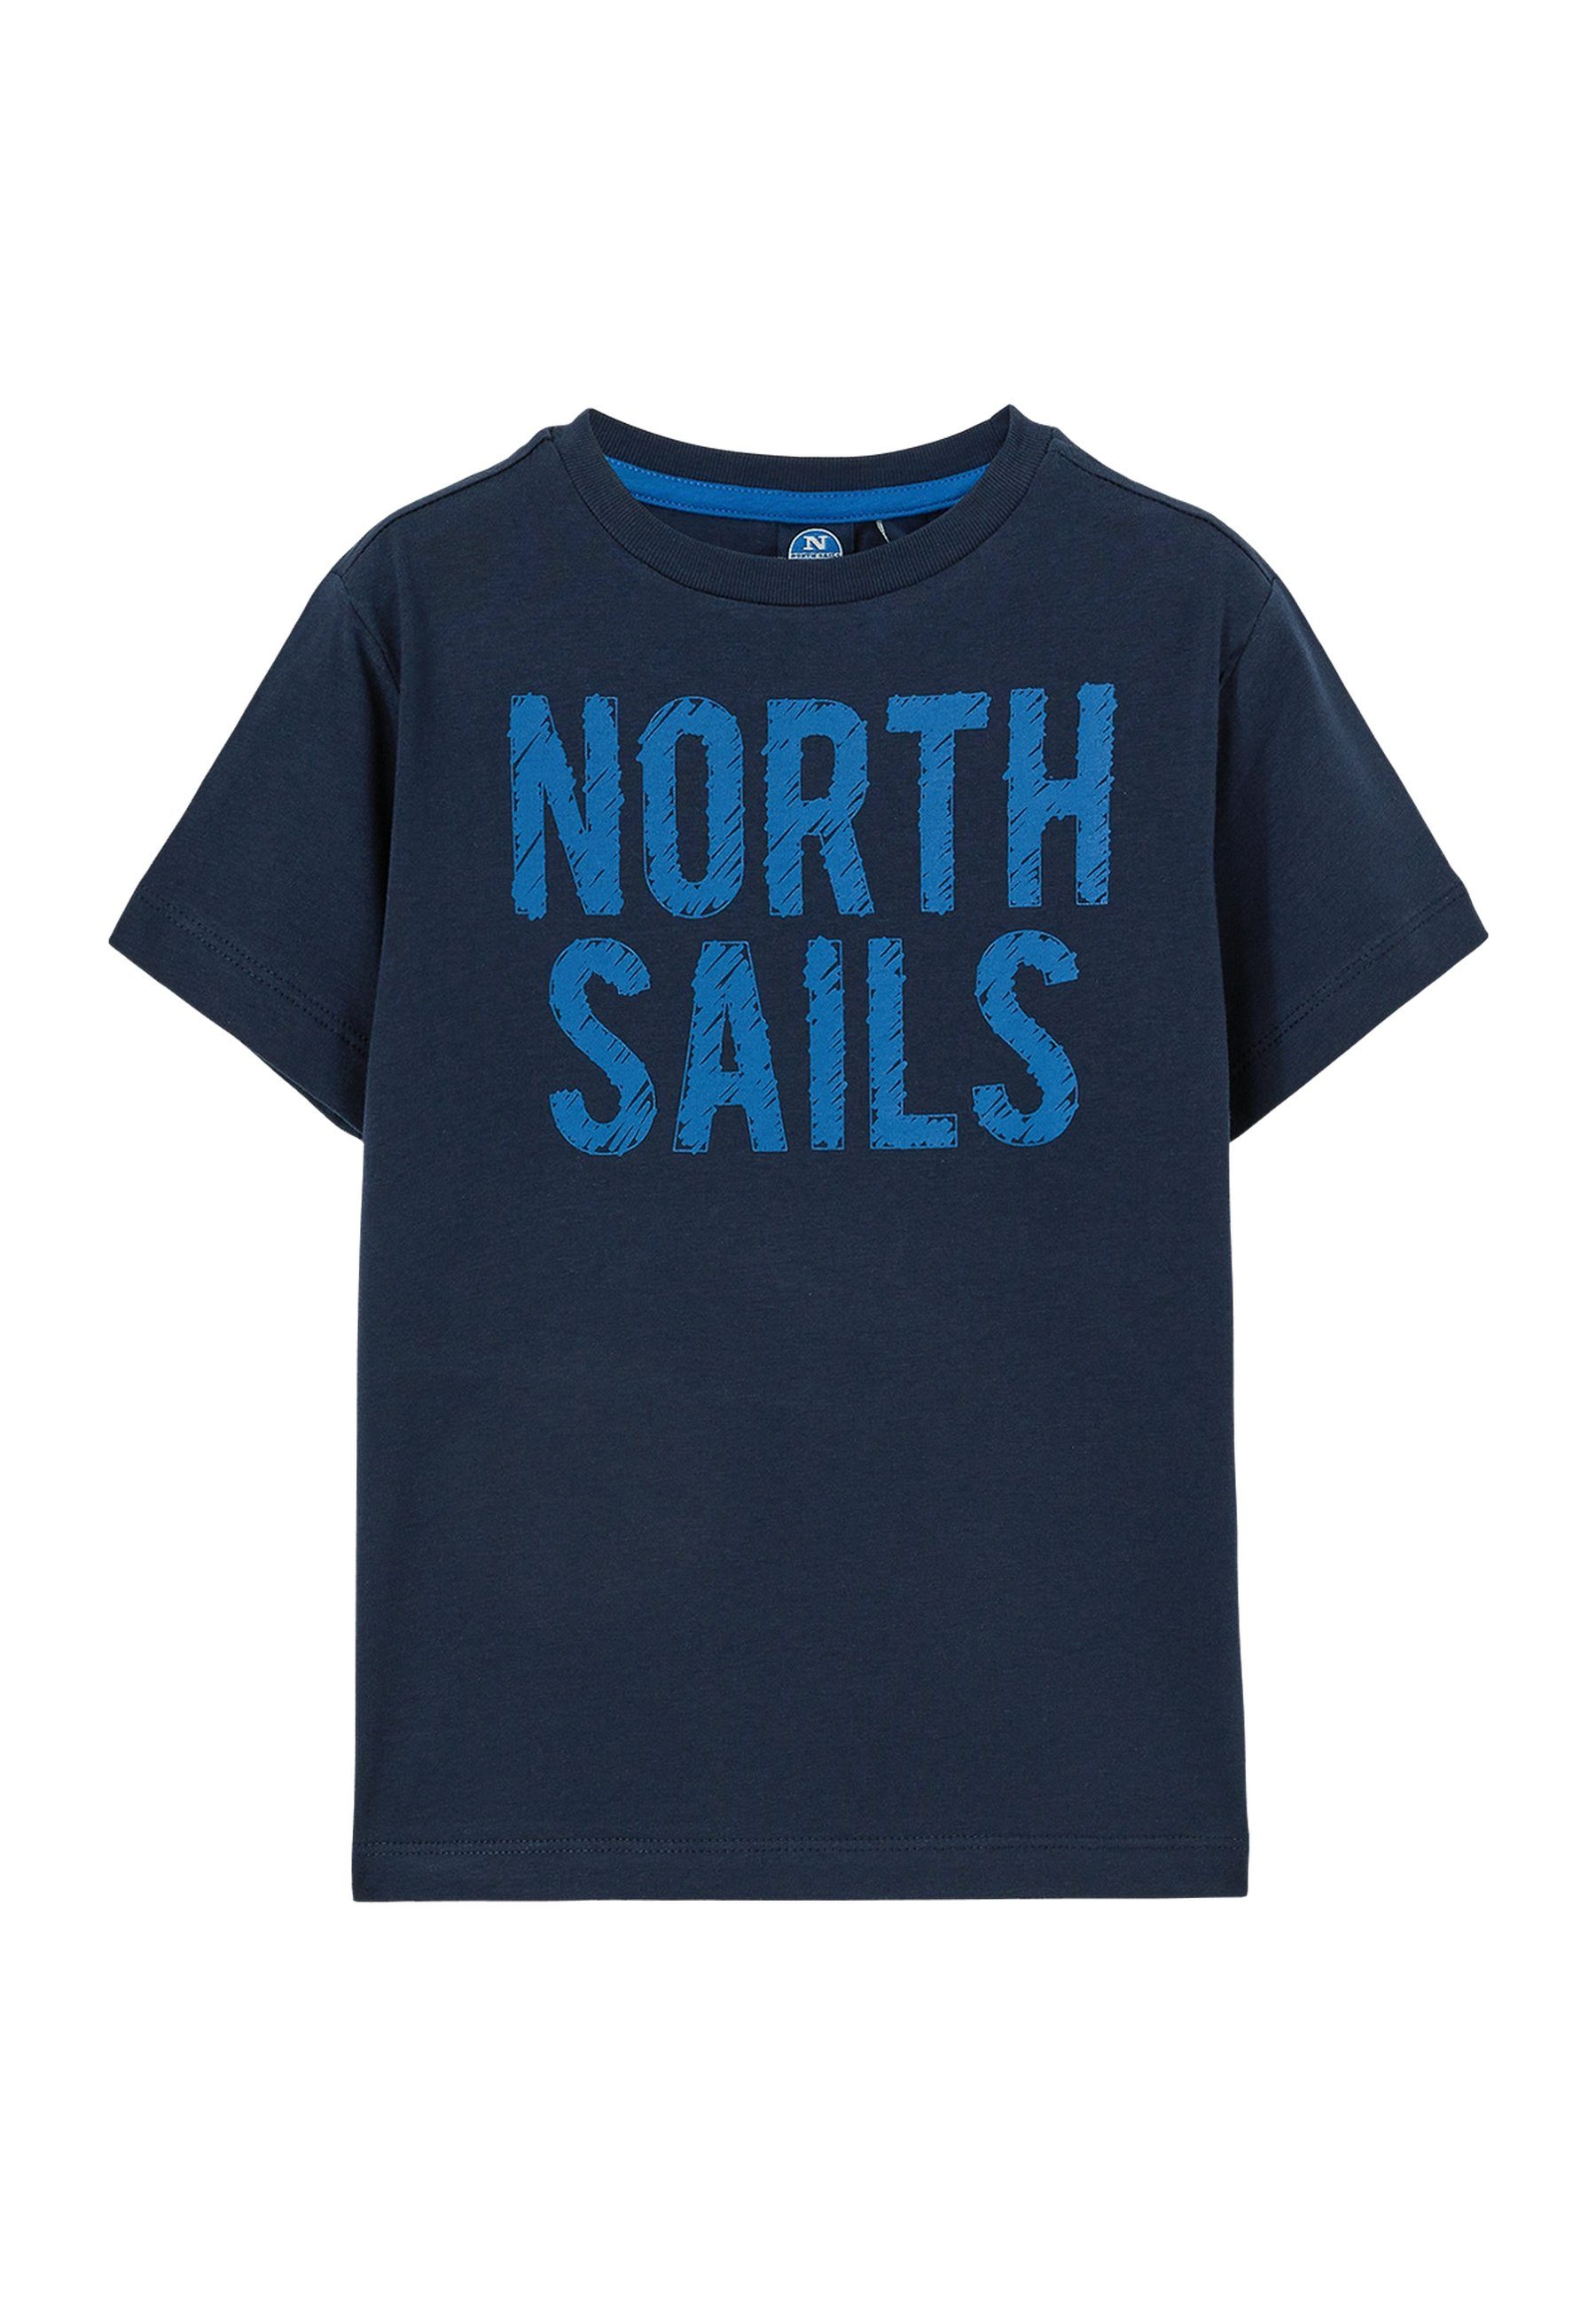 Sails North T-Shirt MARINEBLAU Baumwoll-Jersey-T-Shirt